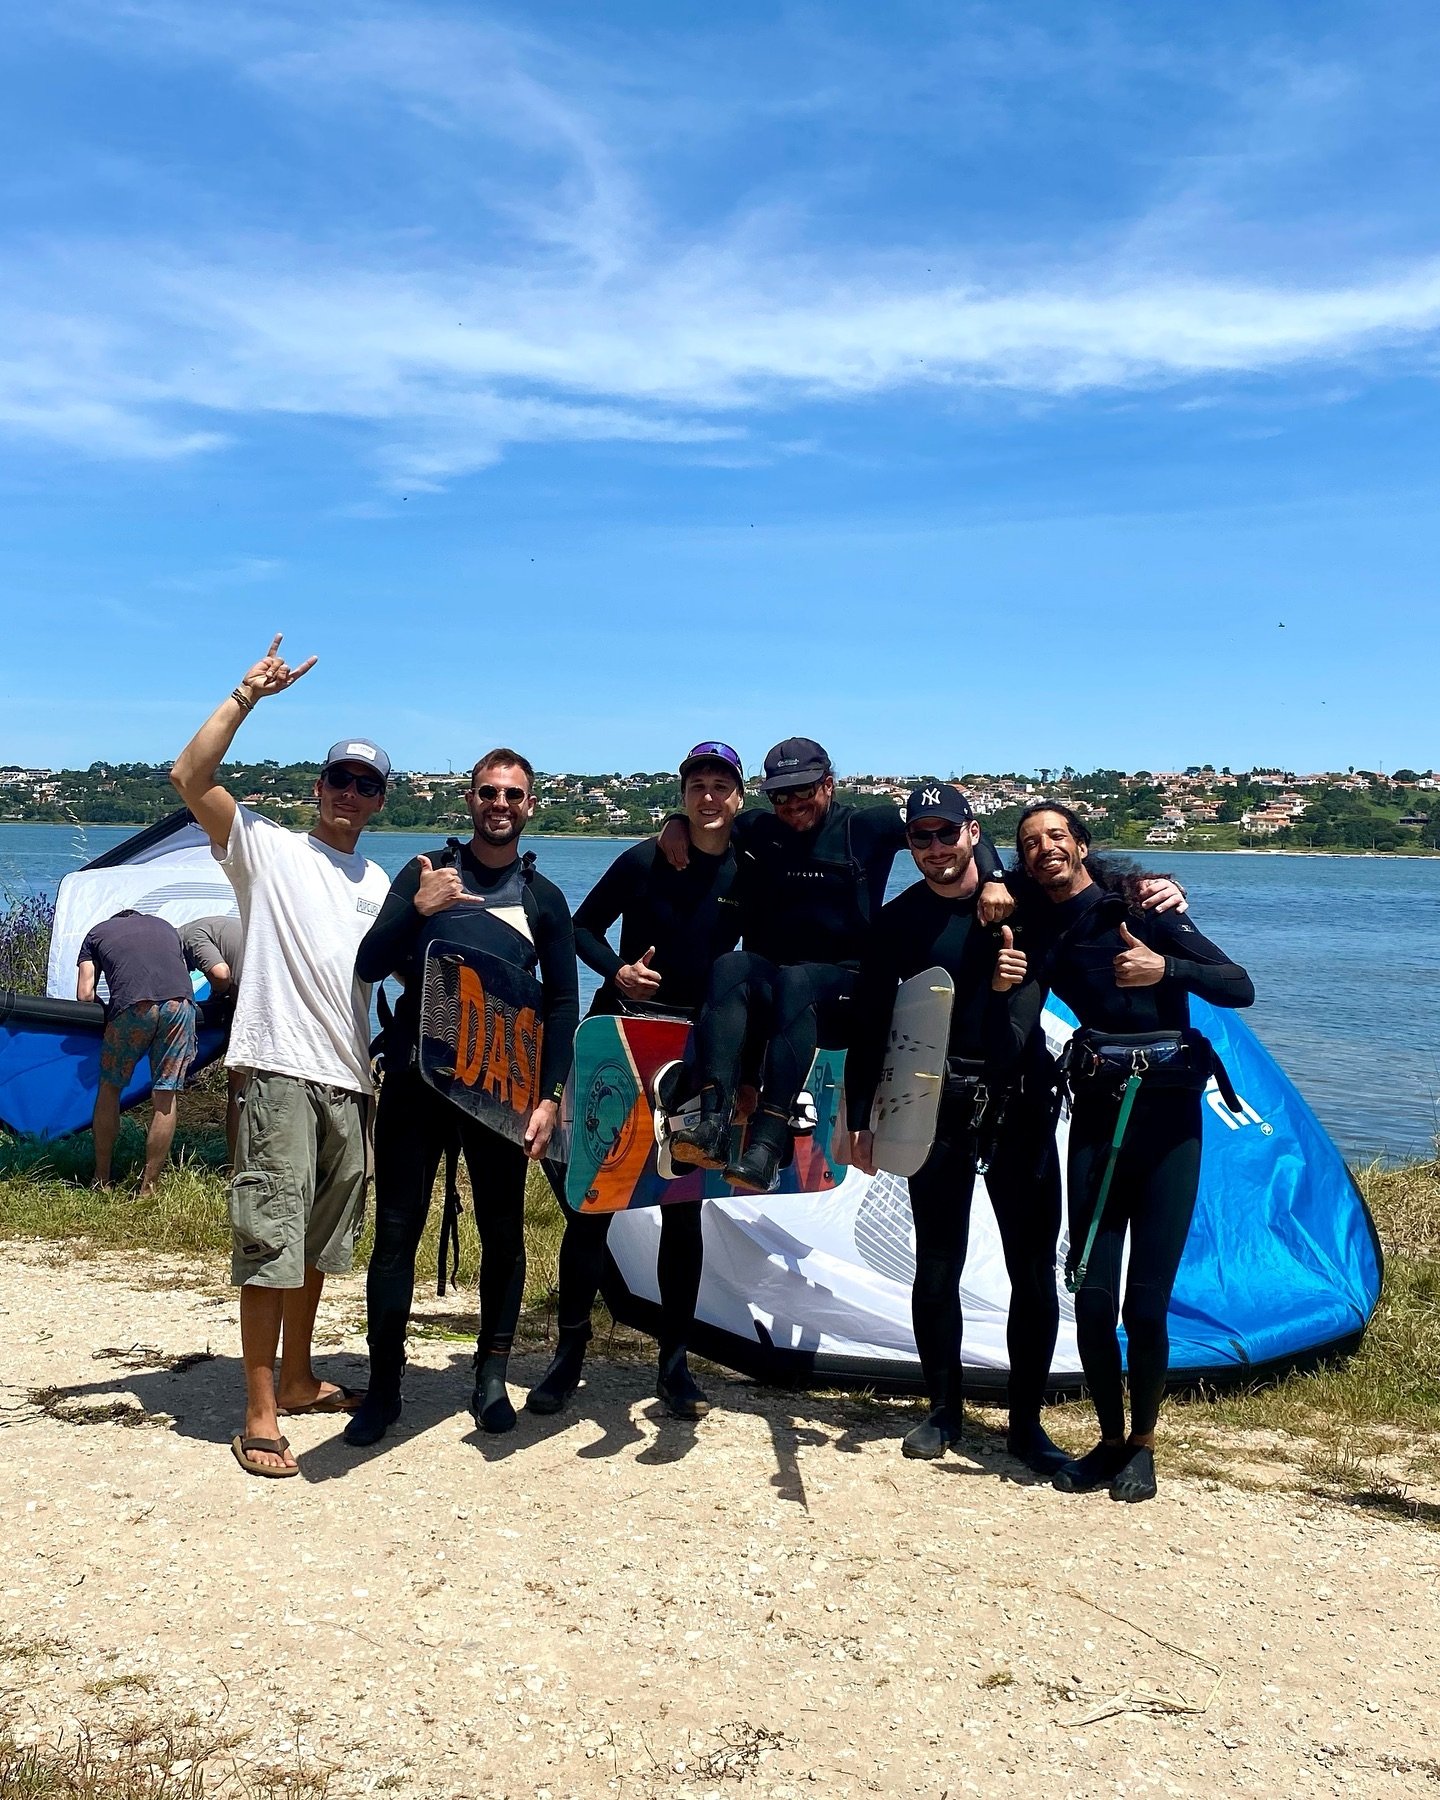 Happy people 😎🤟🏼

#kitesurf #kite #kitesurfing #team #teamwork #progress #beach #sun #ocean #sport #watersports #waves @ozonekites @ozonekitesportugal #portugal 

#kitecontrolportugal
#visitportugal 
#travel 
#trip 

➡️ https://www.kitecontrolport